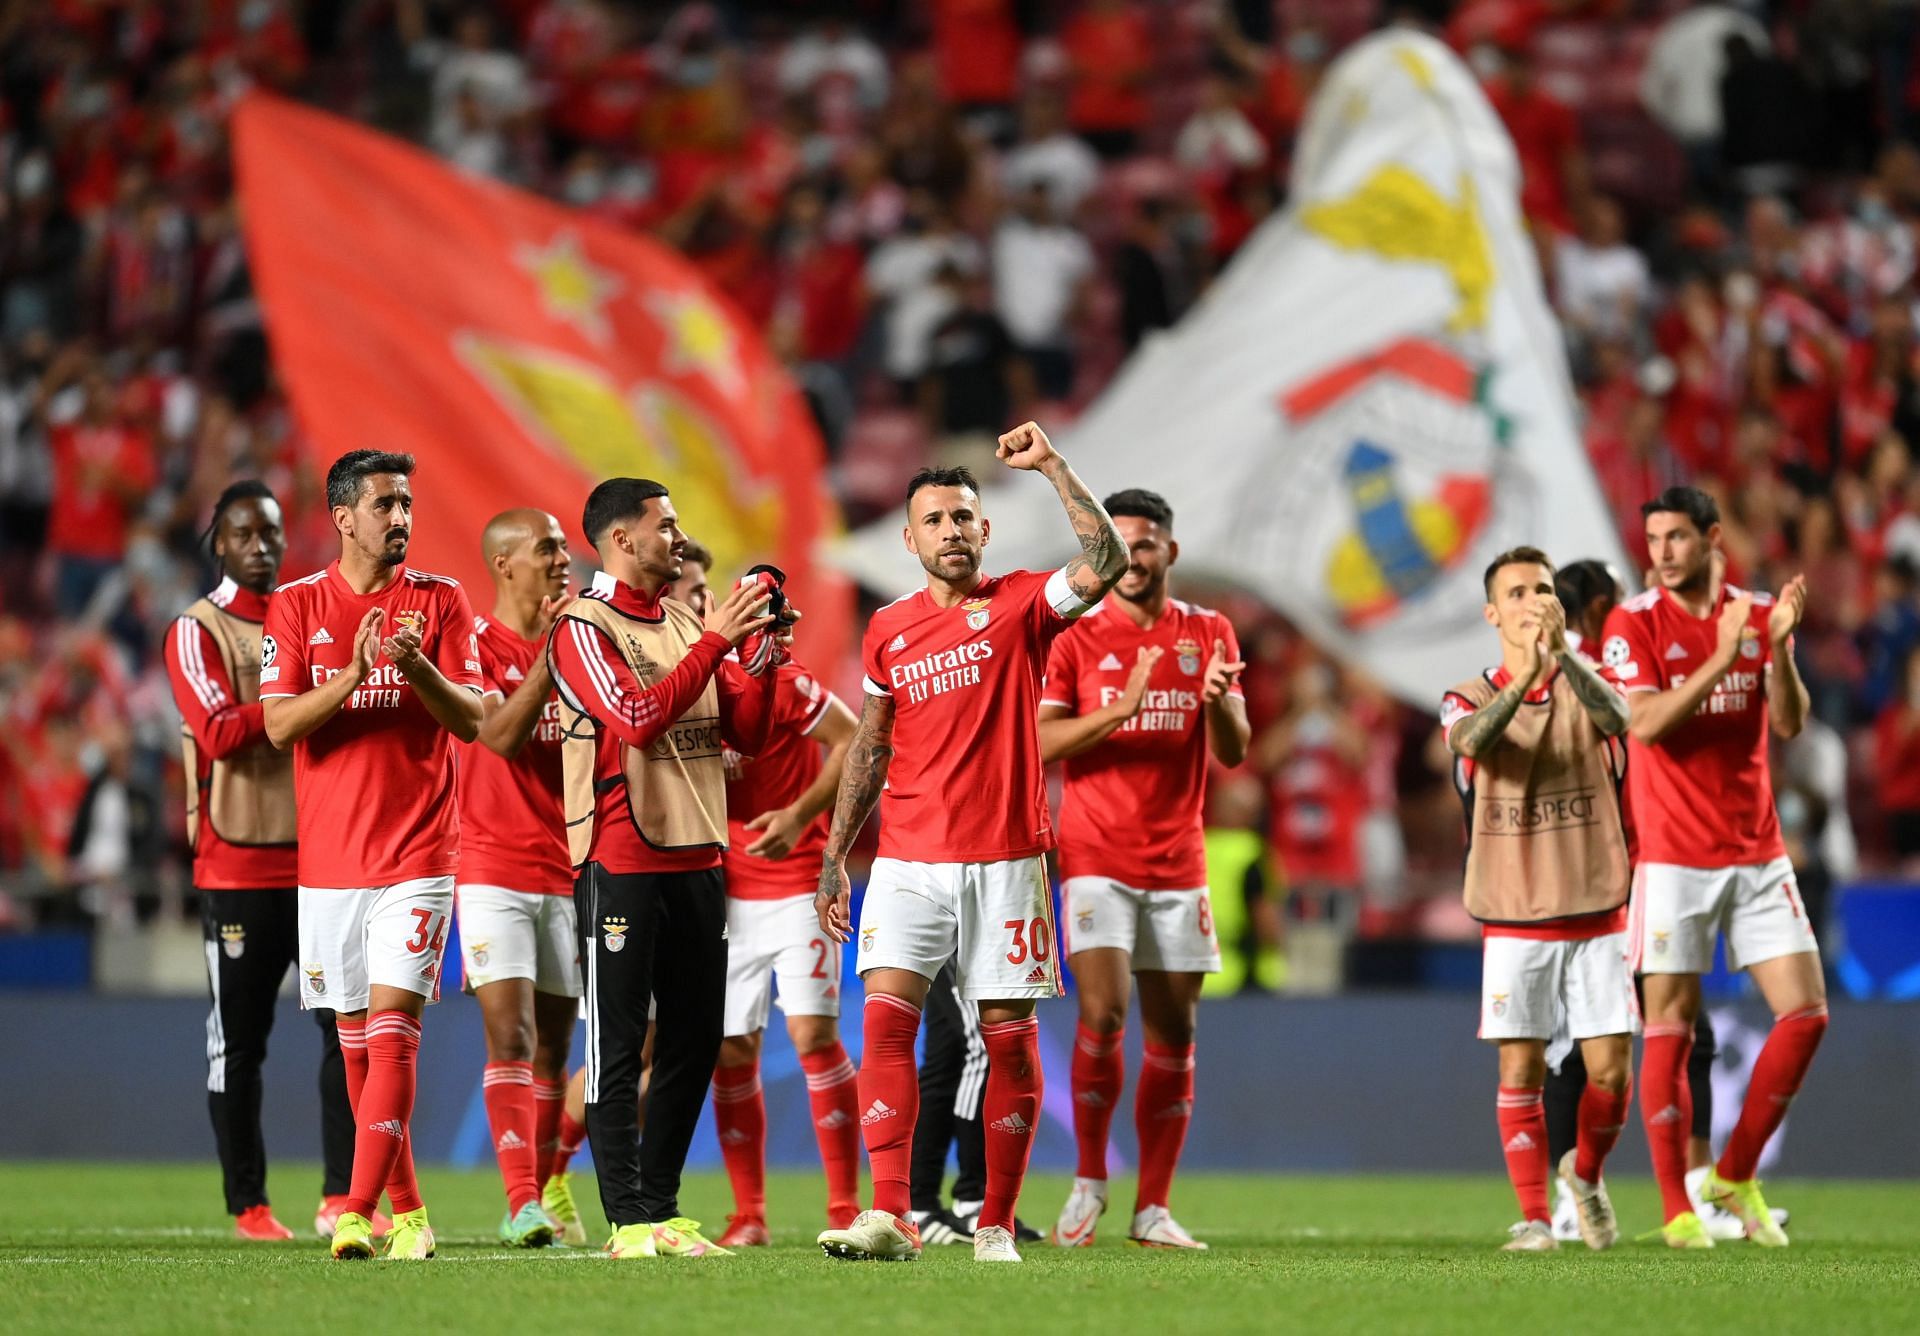 Benfica face Arouca in their Portuguese Primeira Liga fixture on Friday